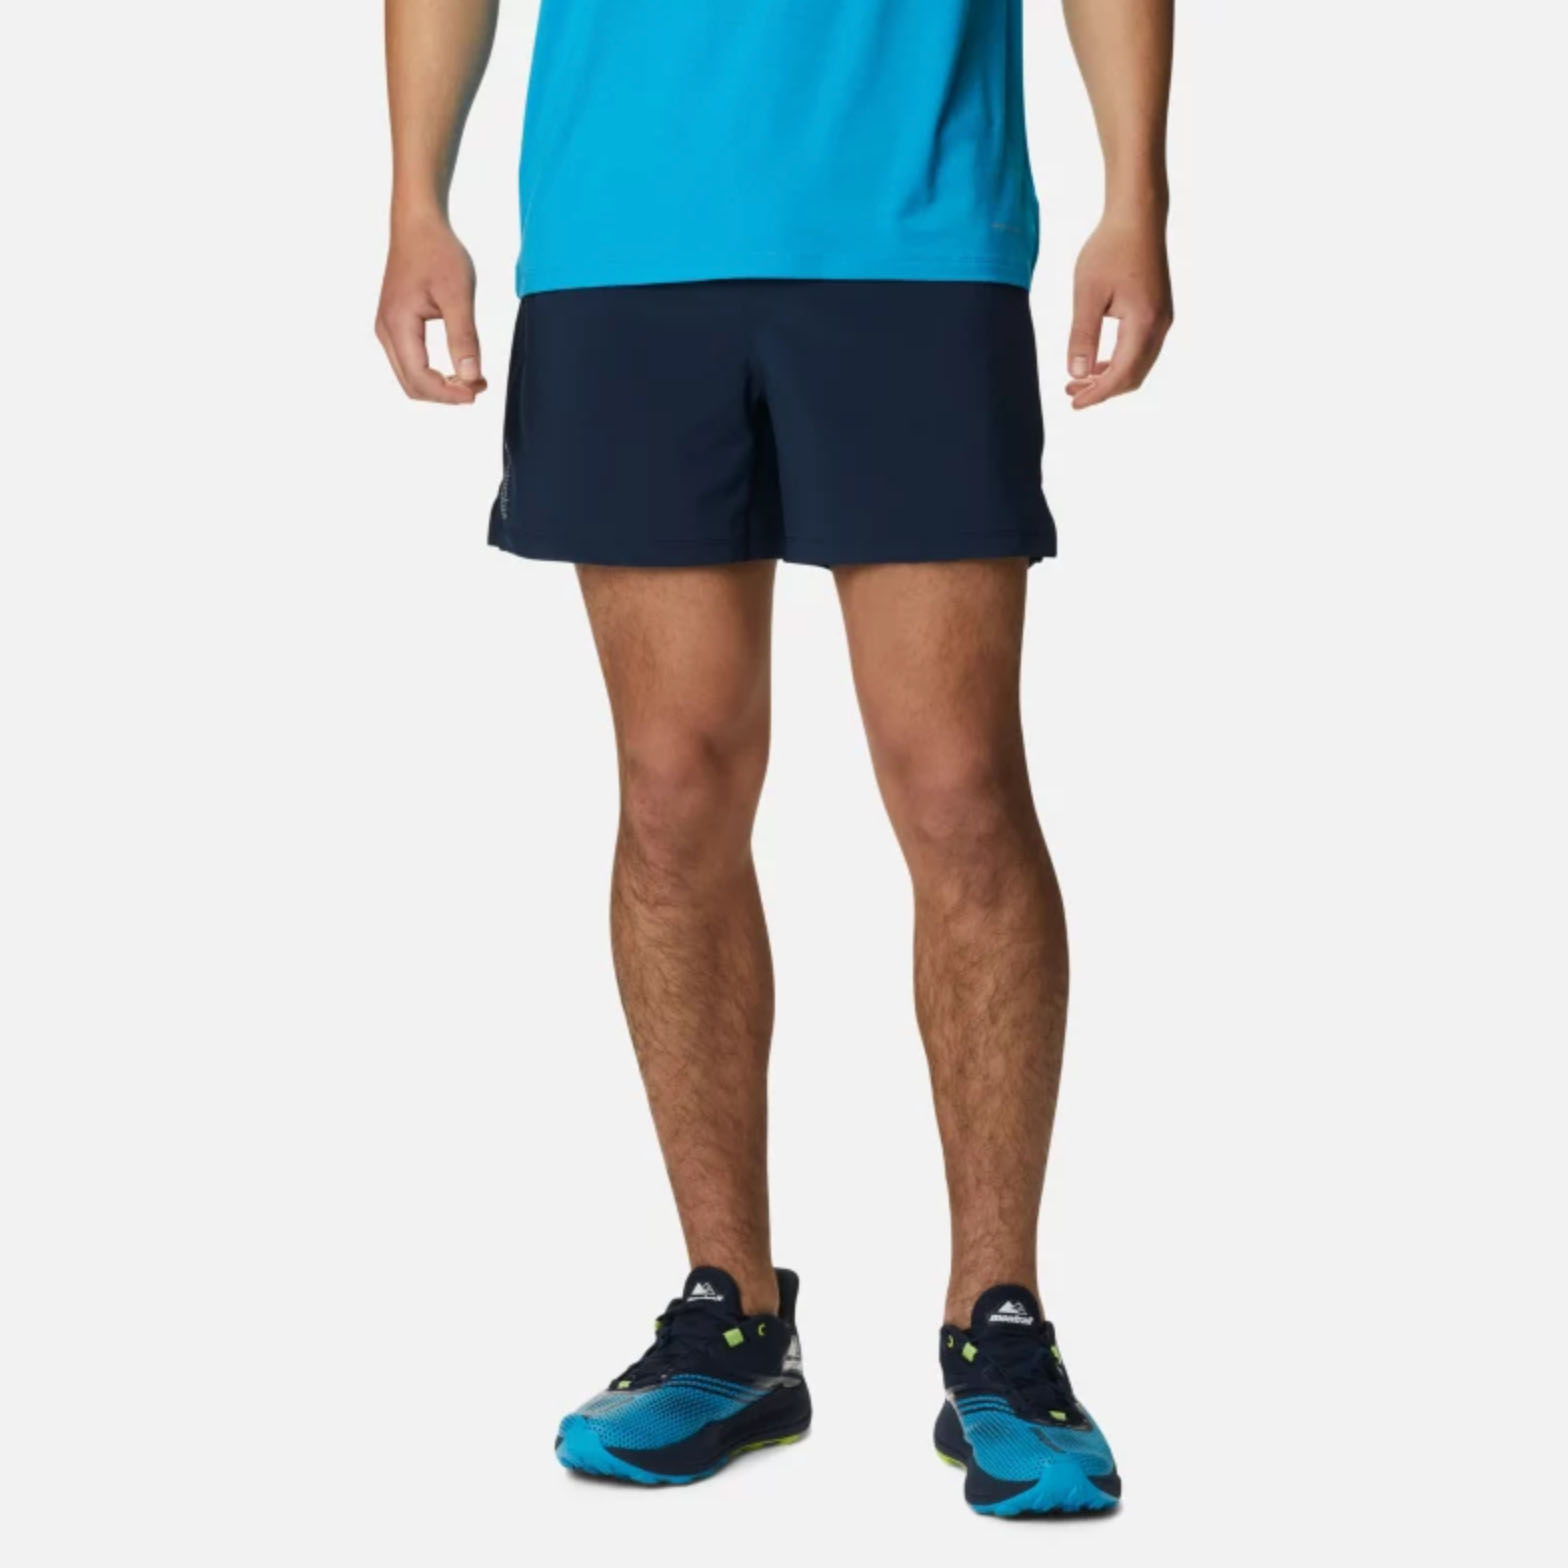 Man wearing dark blue gym shorts